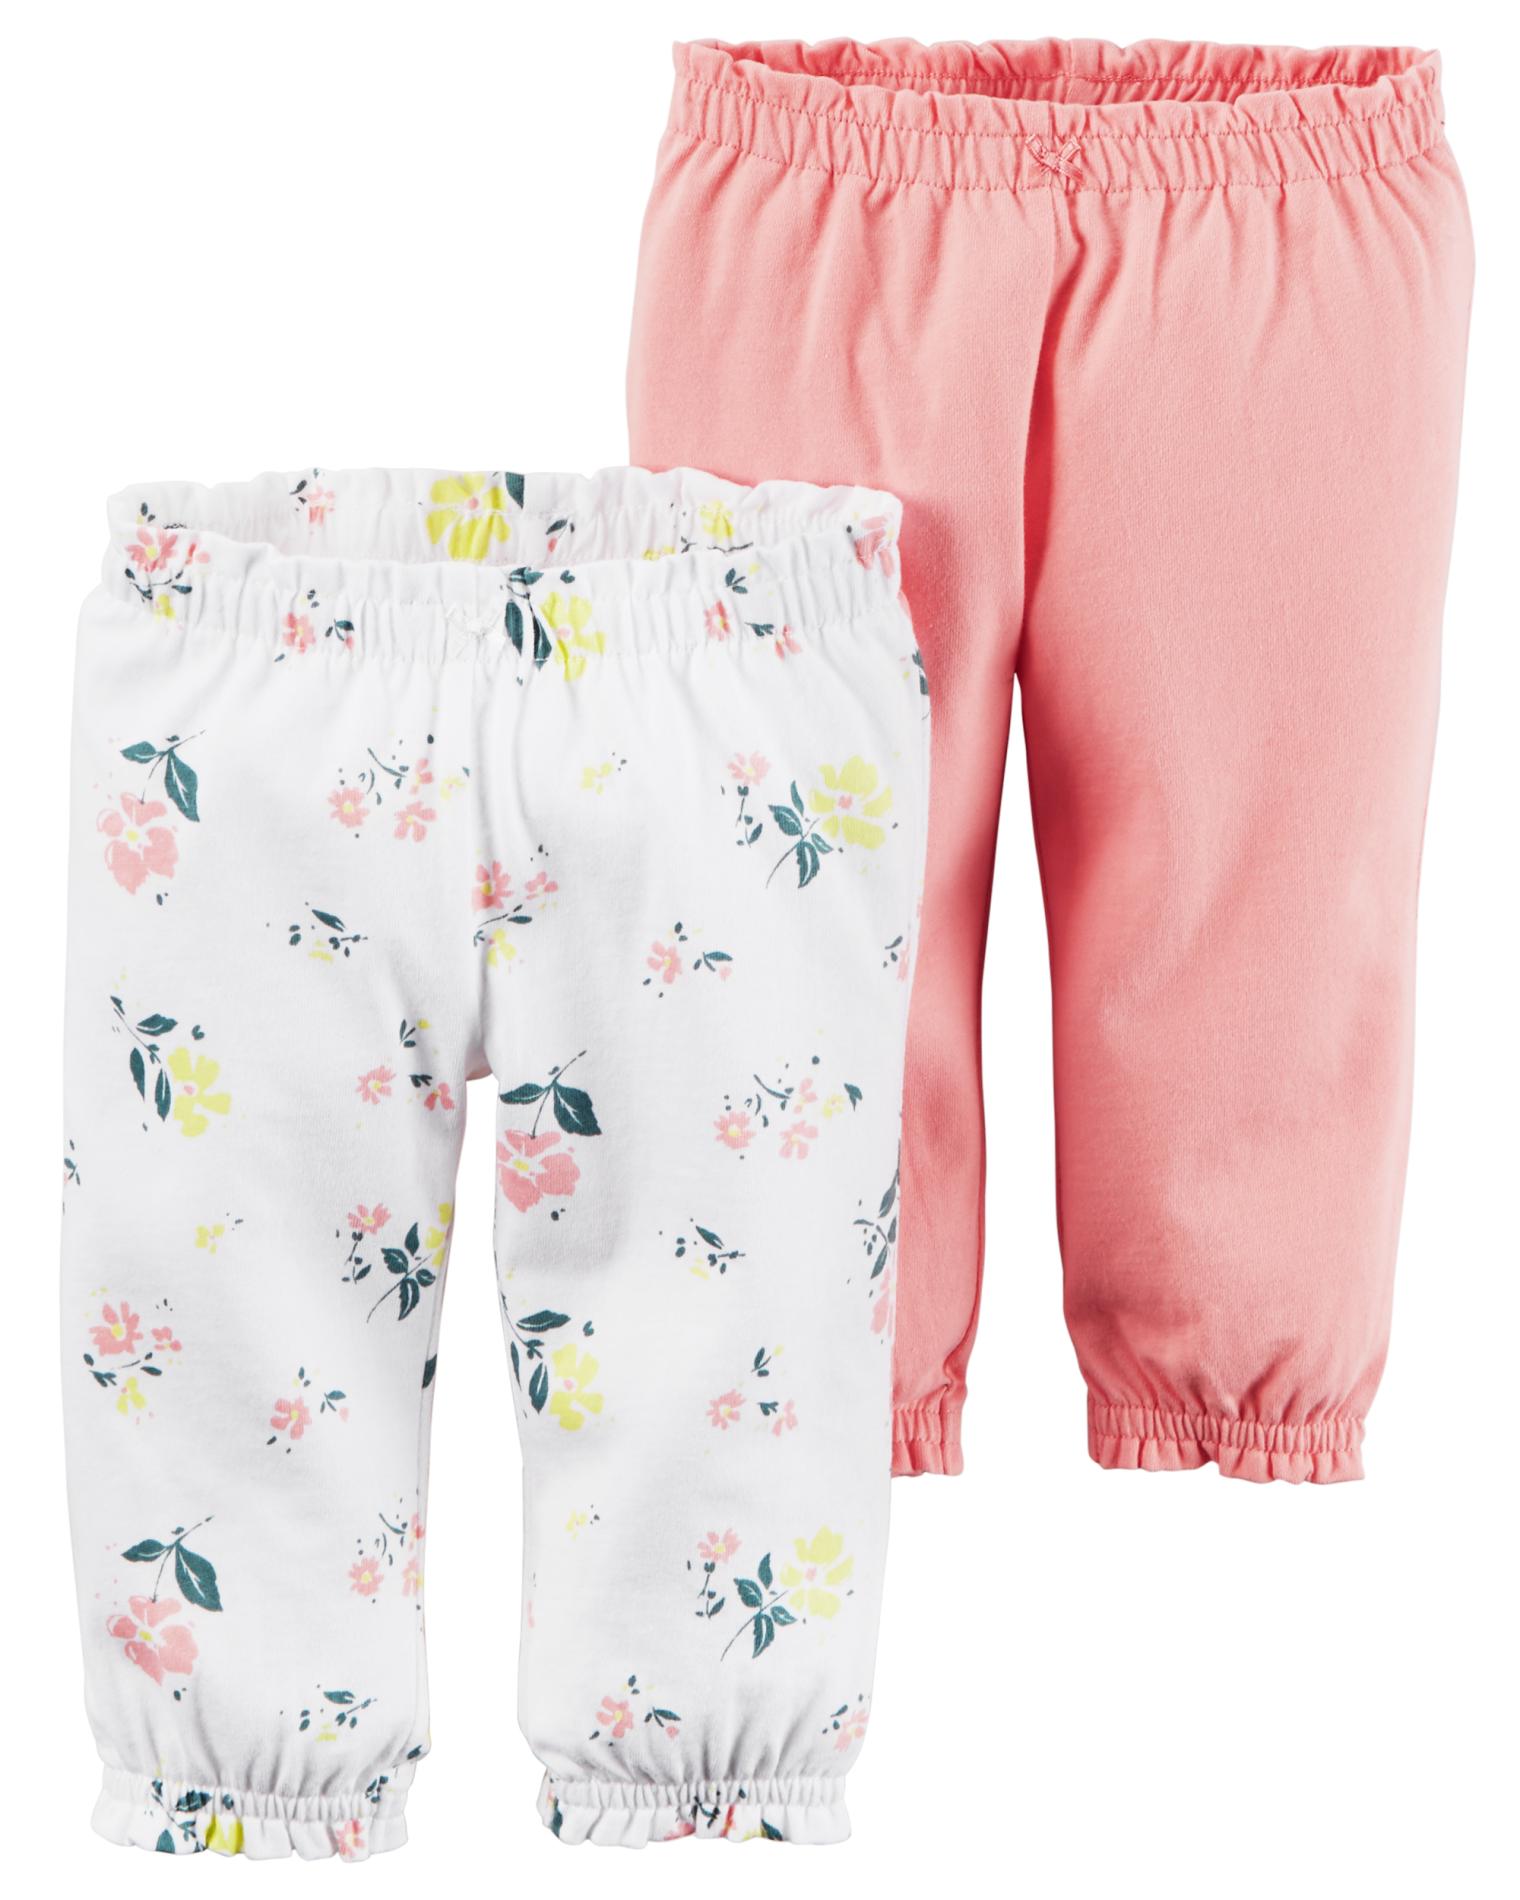 Carter's Newborn & Infant Girls' 2-Pack Knit Pants - Floral & Solid